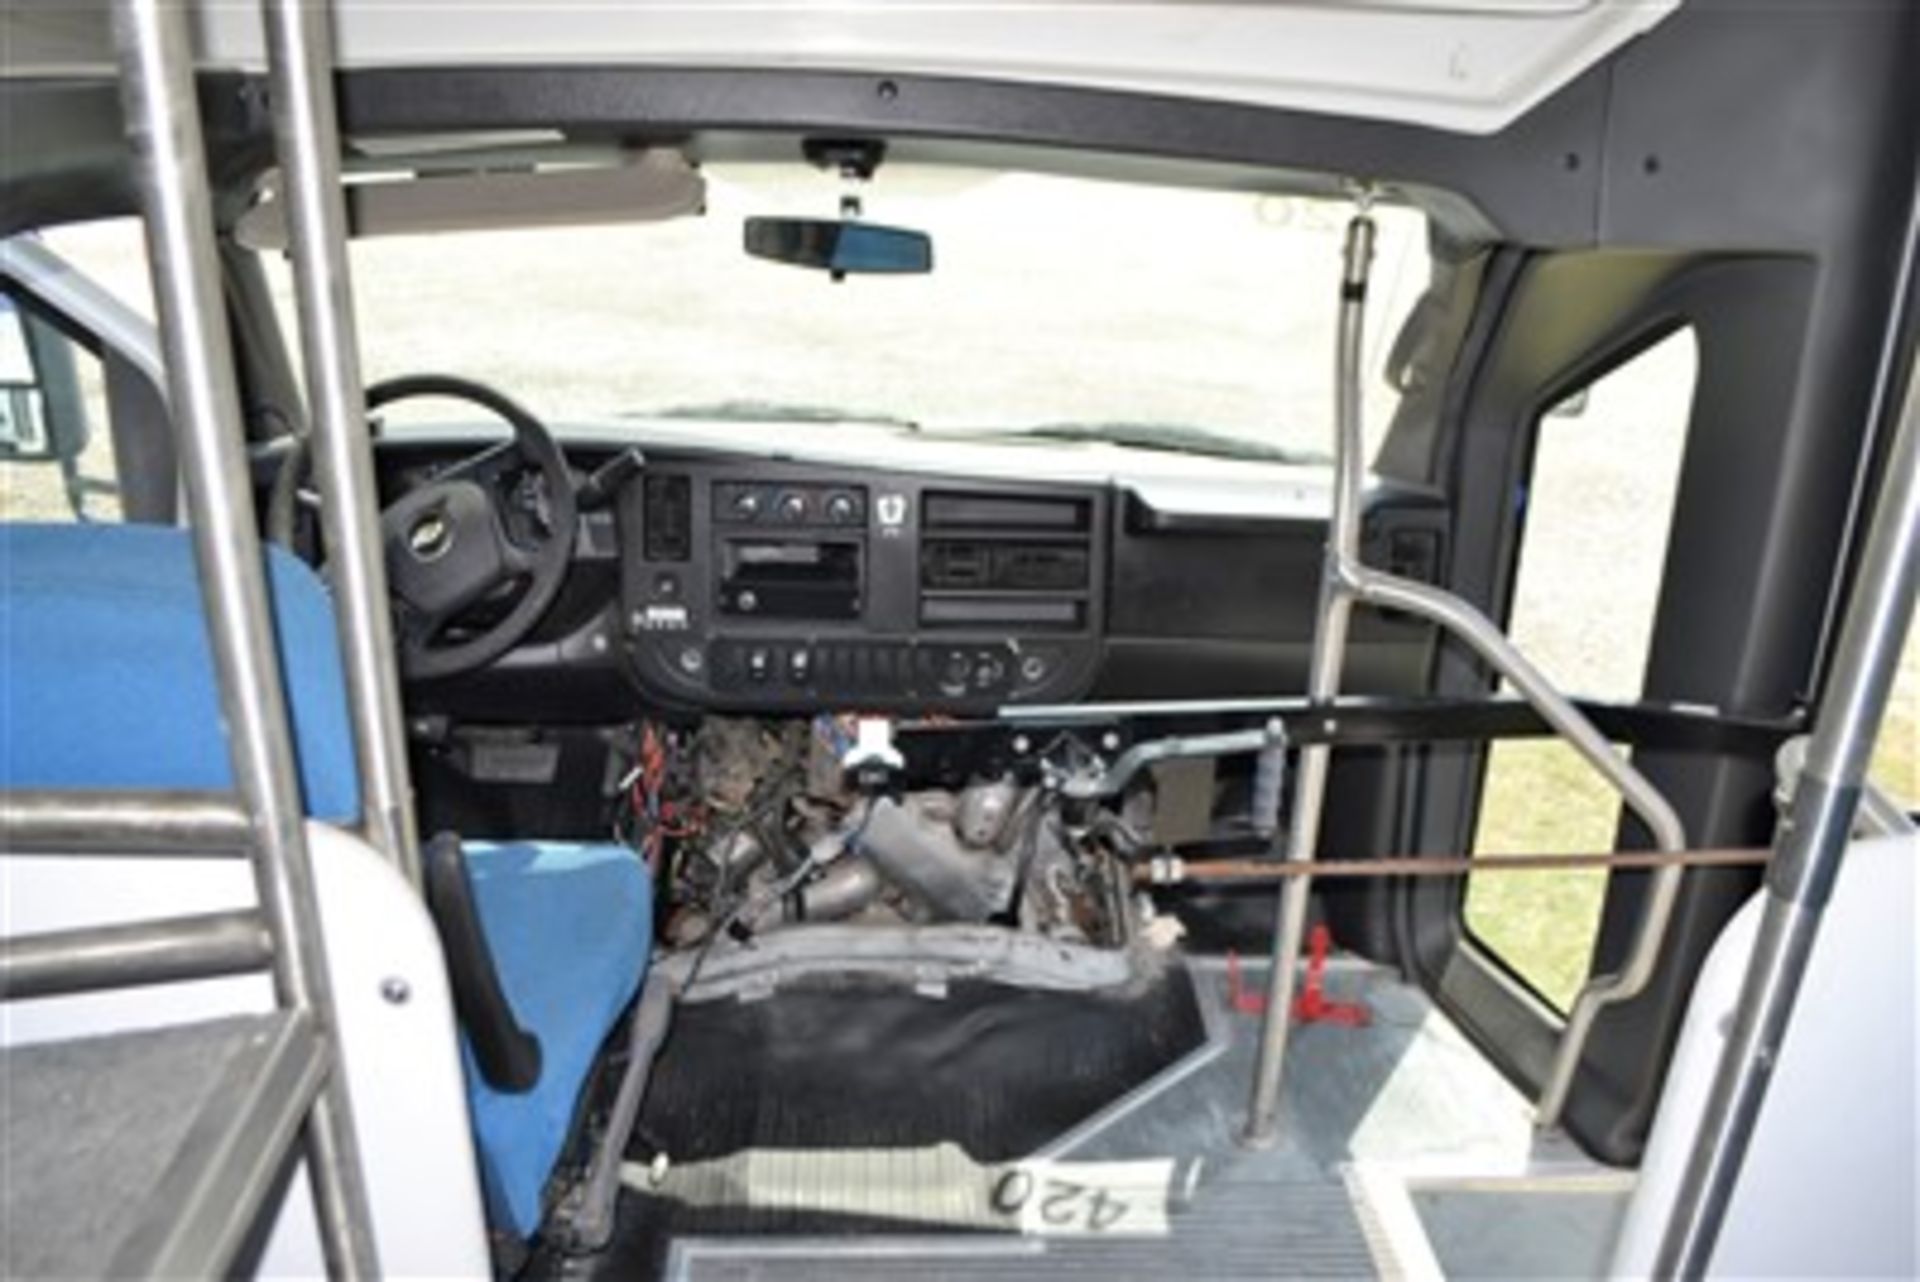 2011 Chevy Eldorado Duramax Diesel Bus - Image 8 of 10